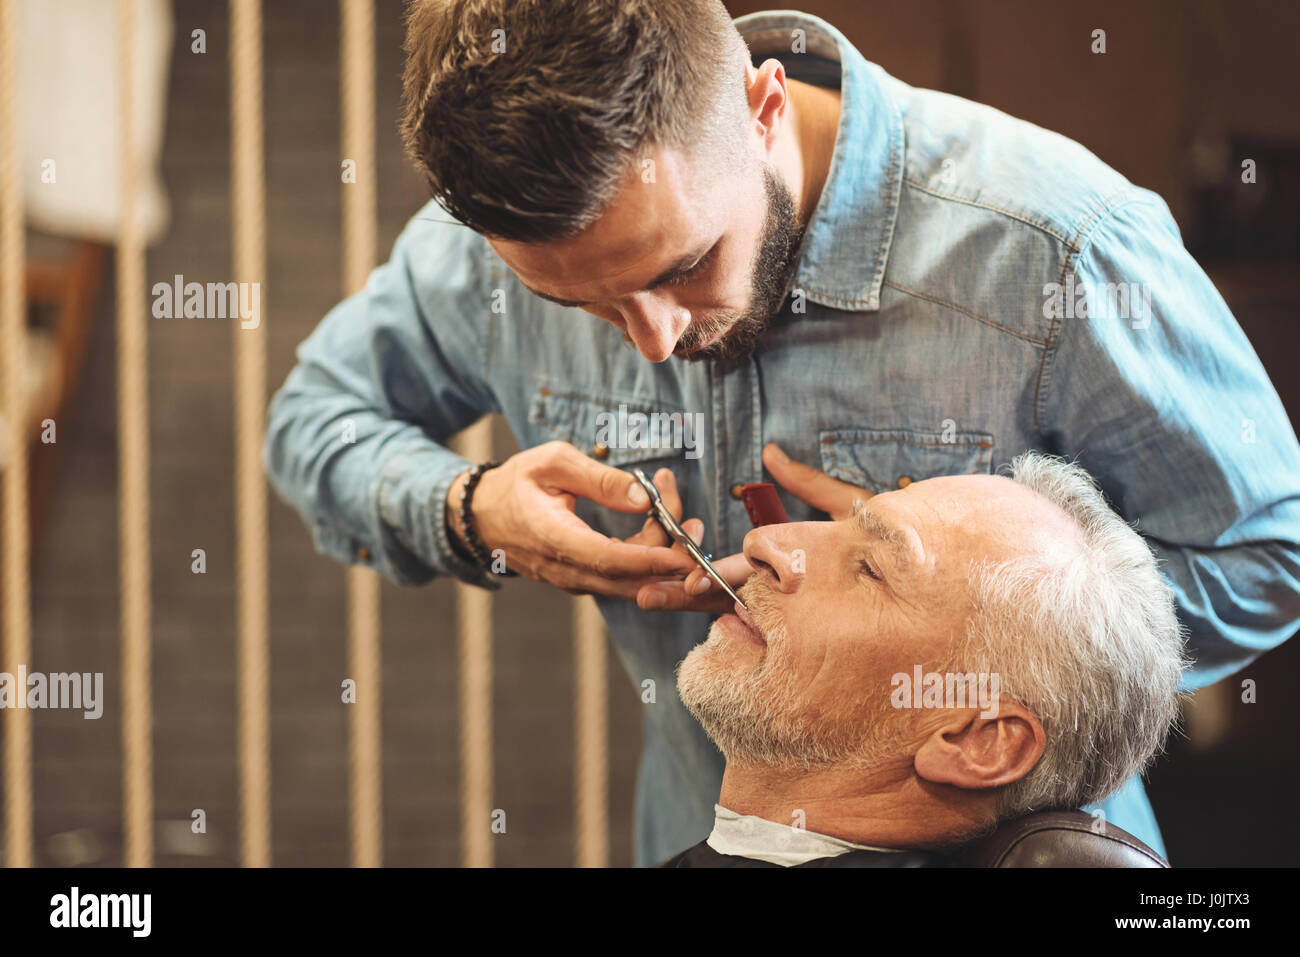 Aufmerksame Friseur Styling Bart des älteren Clients im barbershop Stockfoto